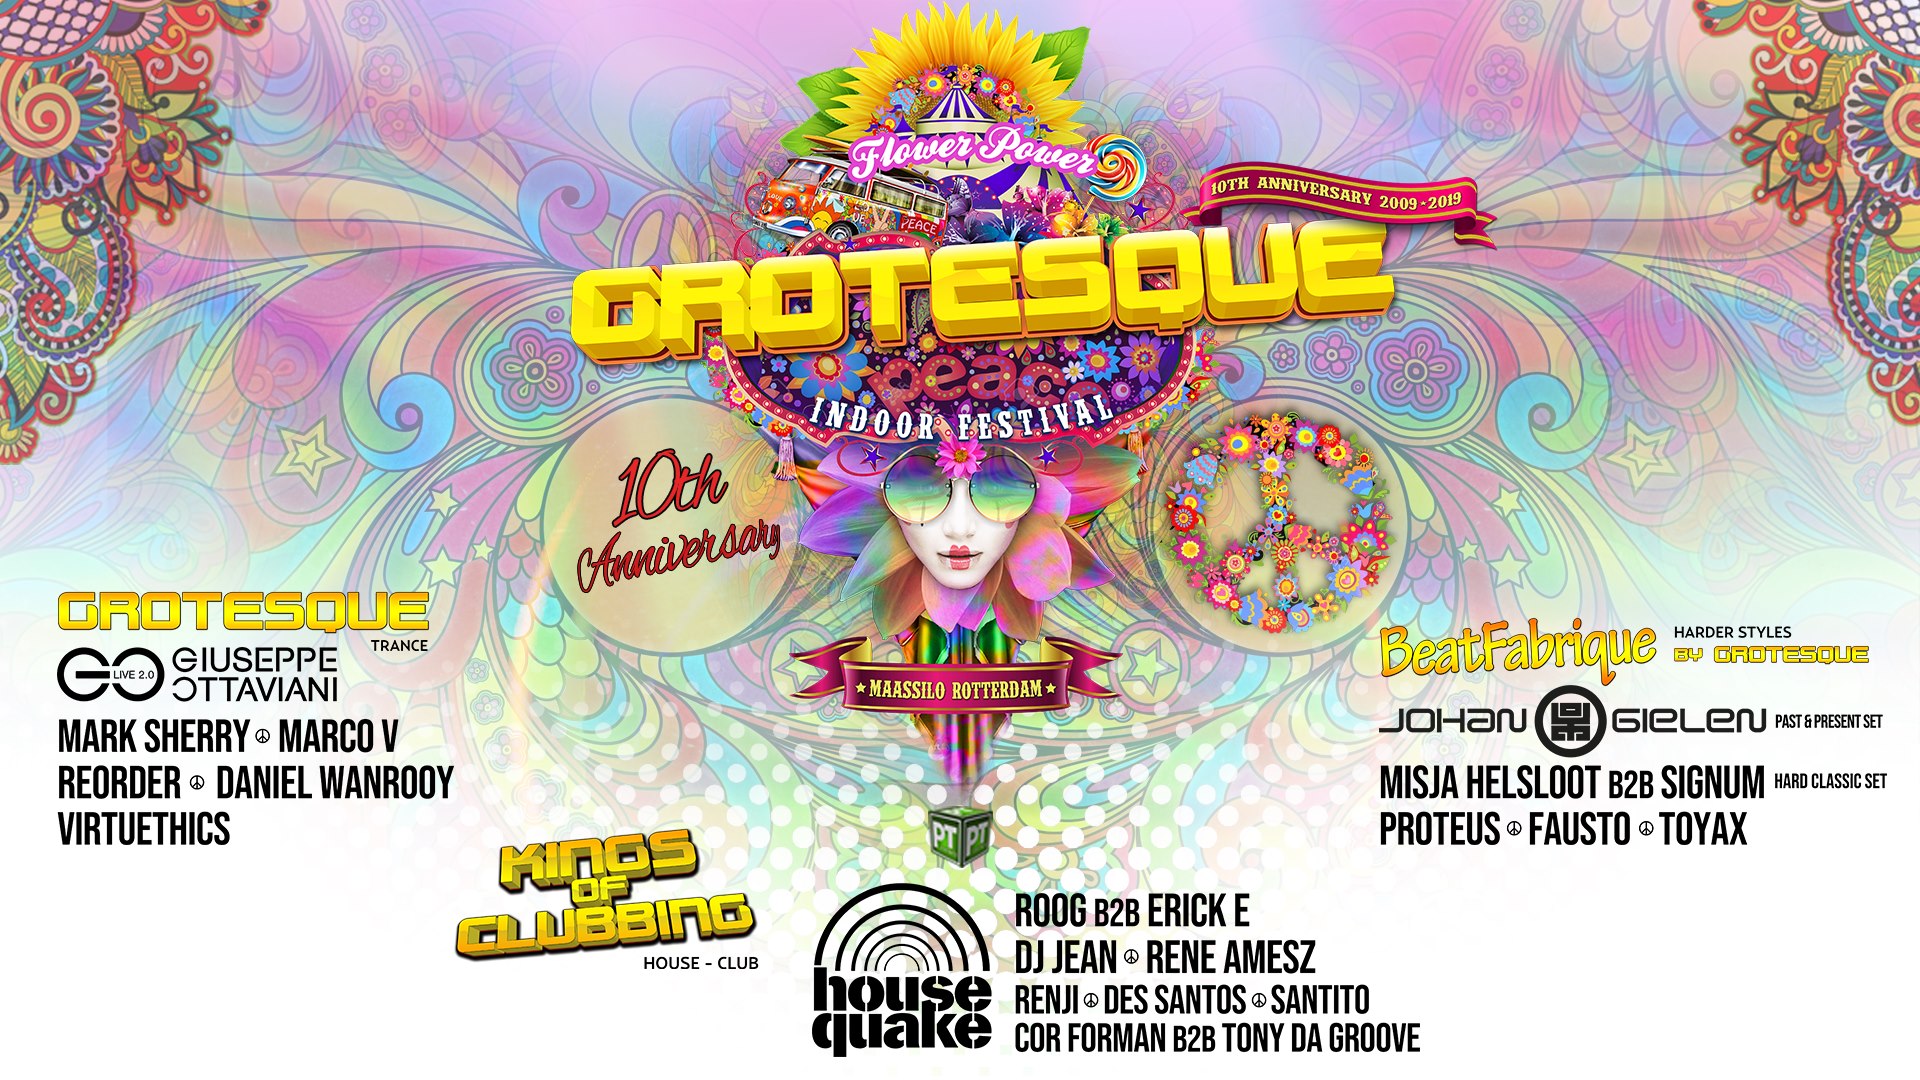 14.12.2019 Grotesque Indoor Festival - 10th Anniversary, Rotterdam (NL)